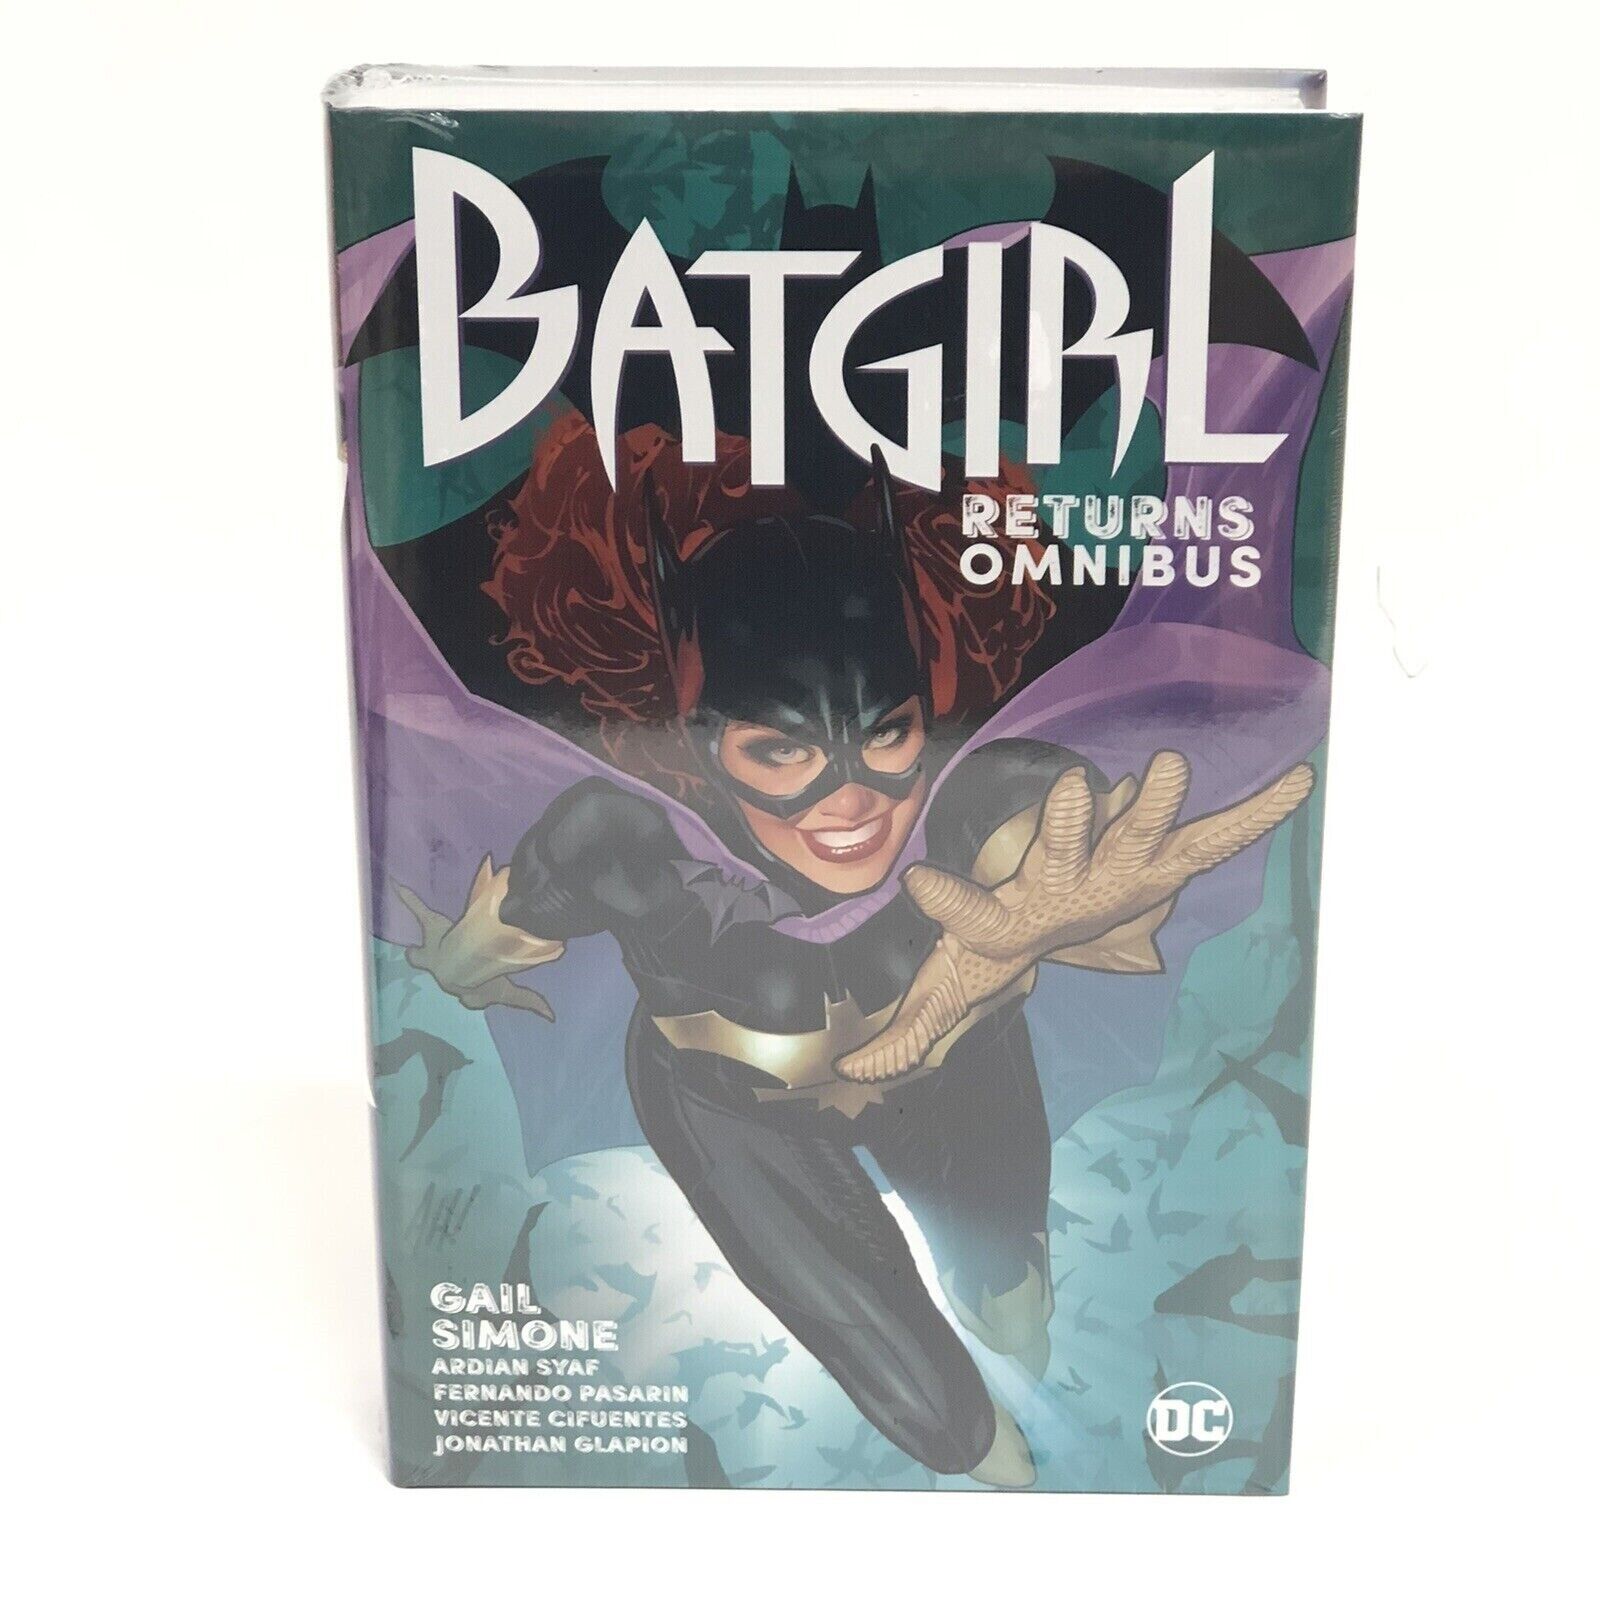 Batgirl Returns Omnibus Gail Simone New DC Comics HC Hardcover Sealed